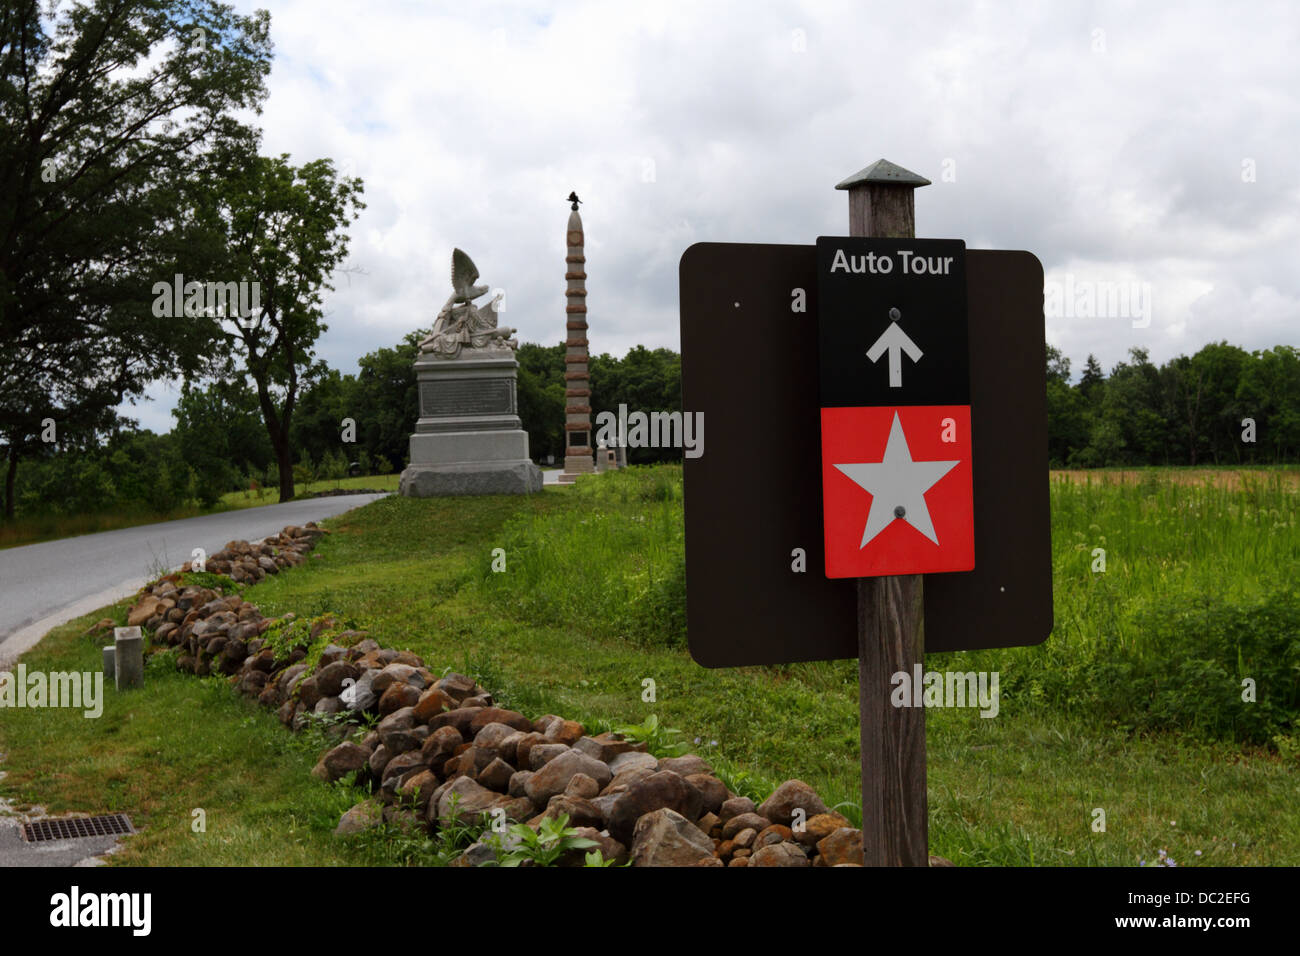 Sign on Doubleday Avenue indicating auto tour route through Gettysburg battlefield, Gettysburg National Military Park, Pennsylvania, USA Stock Photo